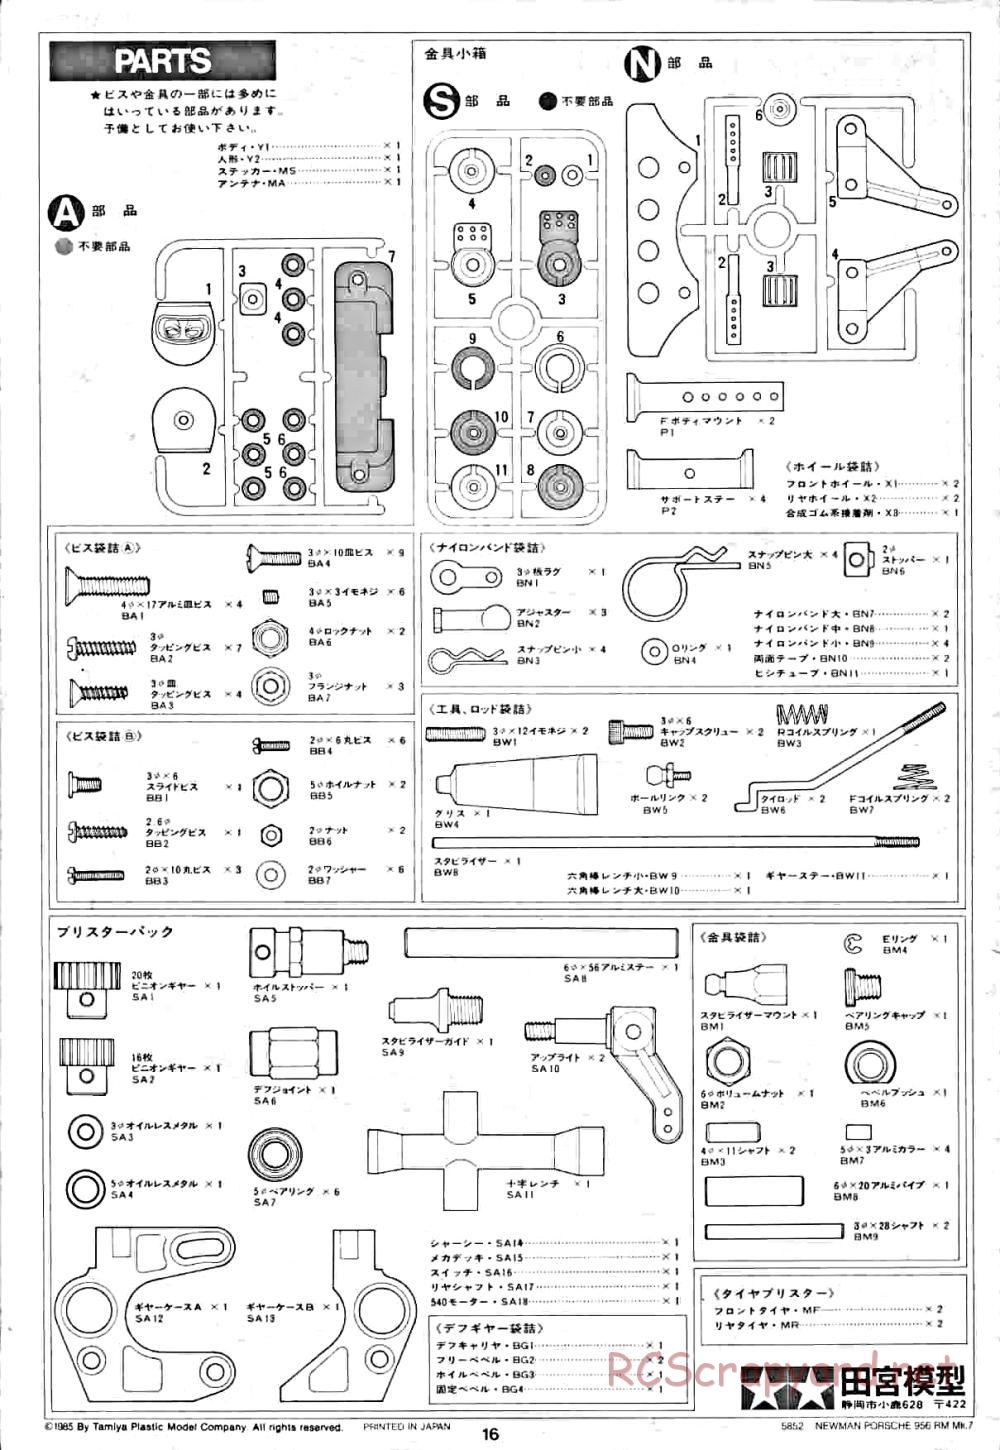 Tamiya - Newman Prsch 956 - RM MK.7 - 58052 - Manual - Page 16